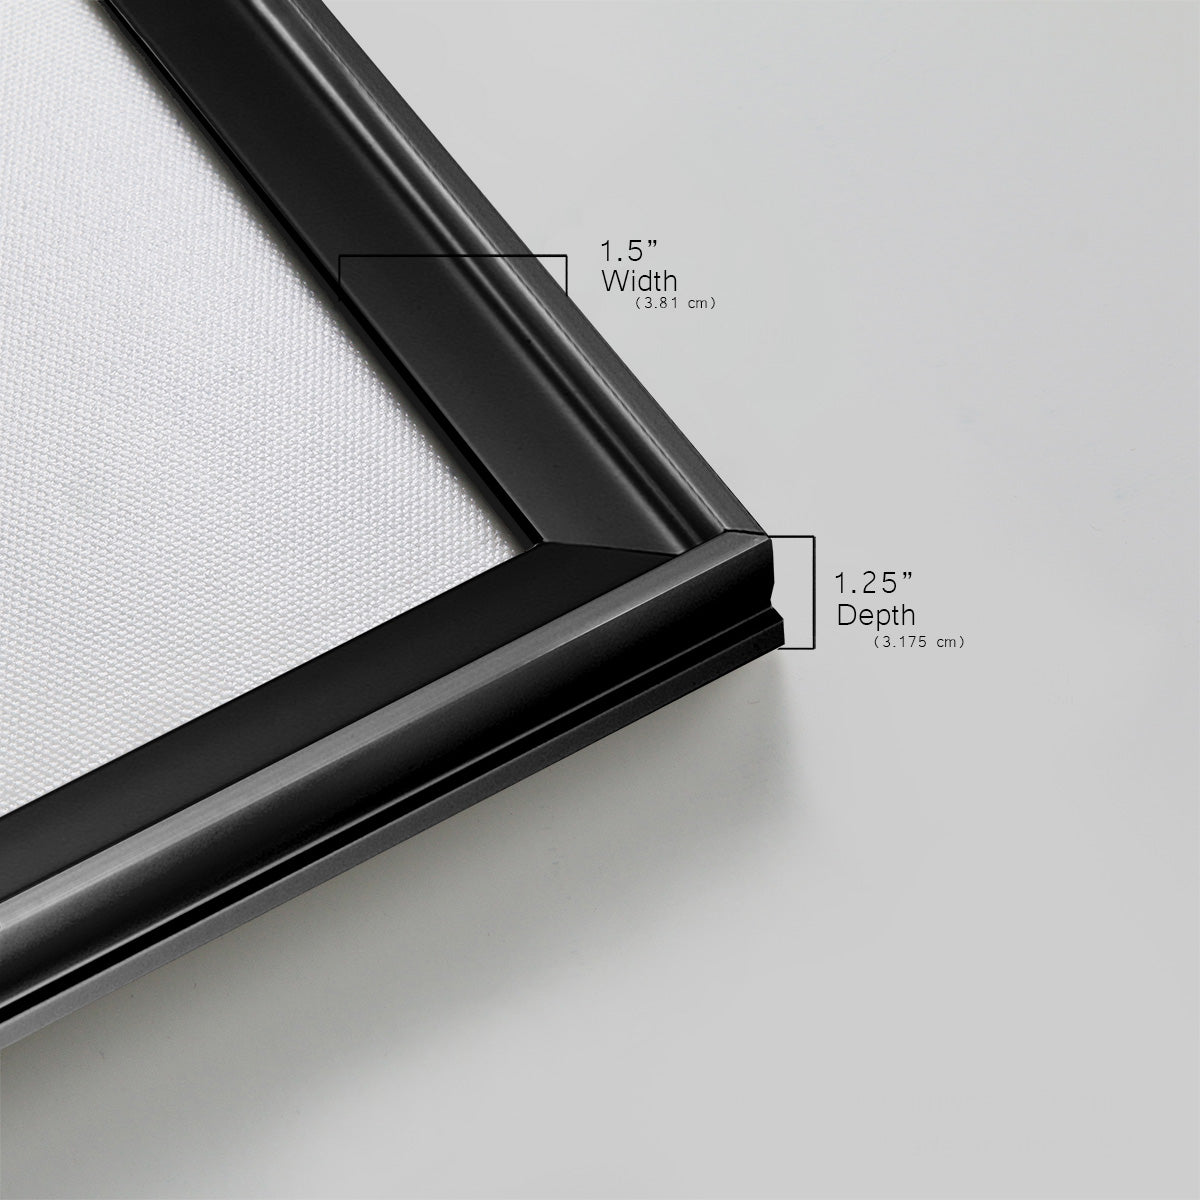 Whitestone II Premium Framed Print - Ready to Hang